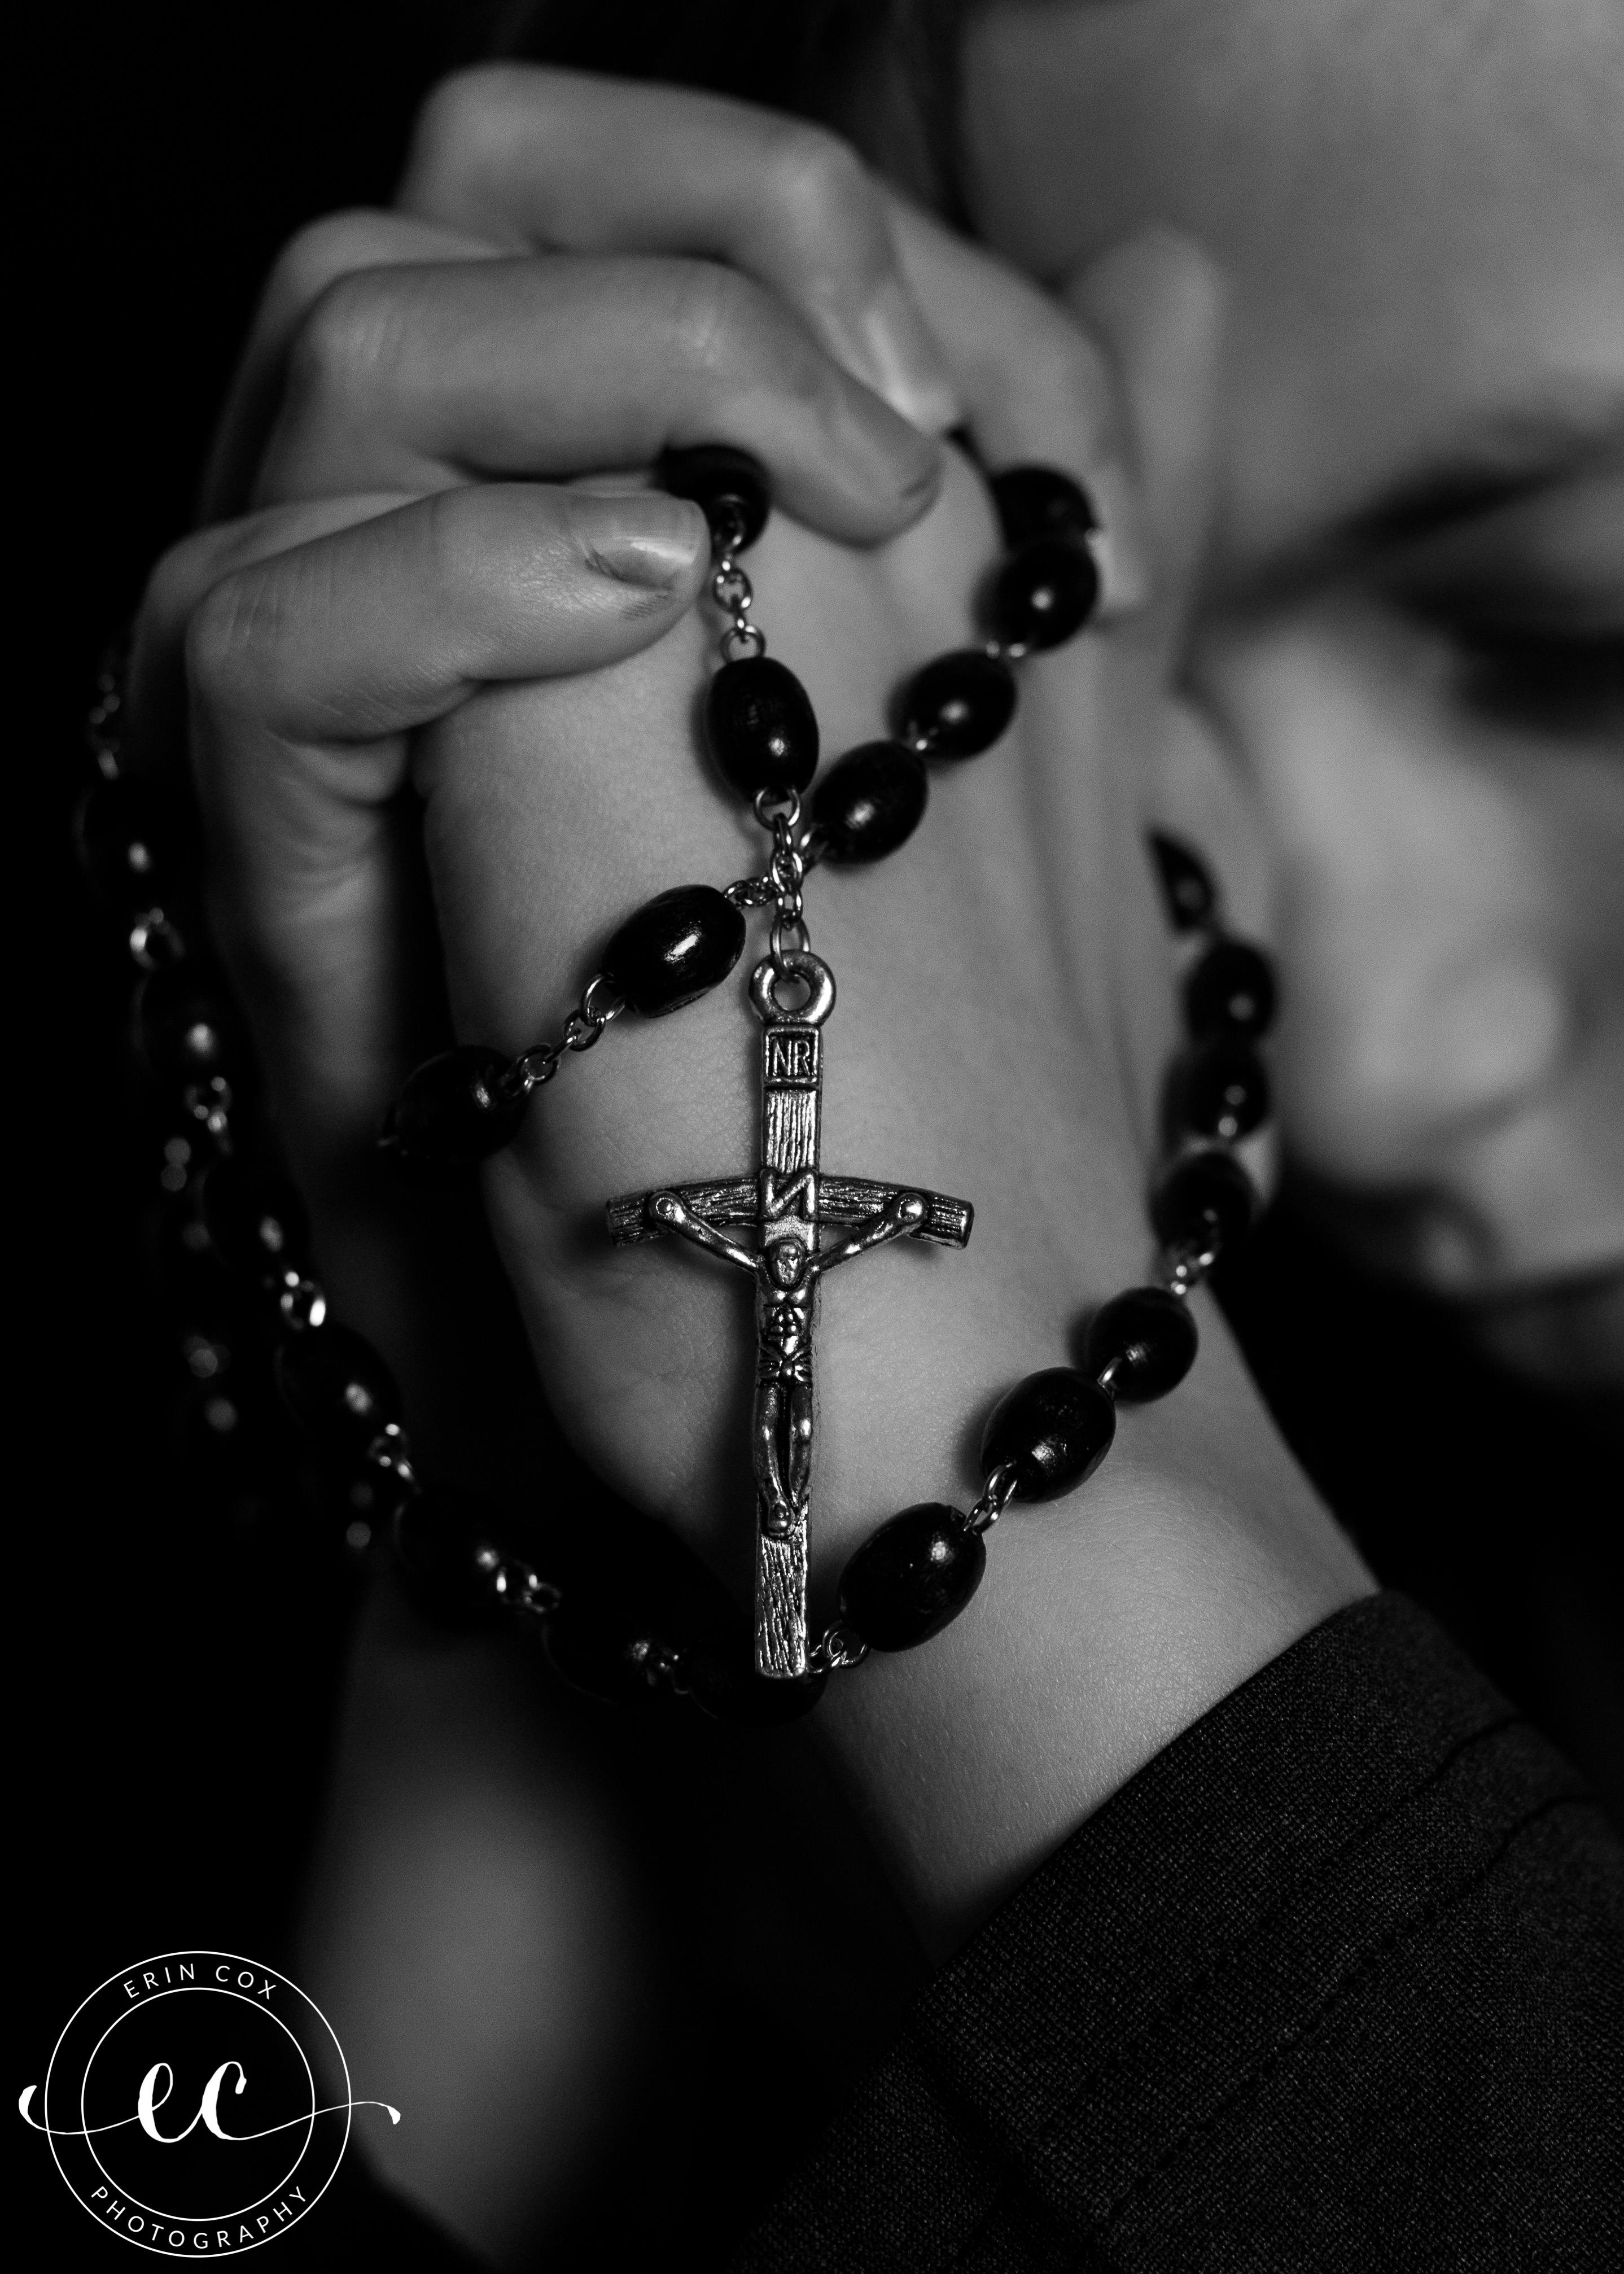 pexels-photo-1942180.jpeg?cs=srgb&dl=hands-praying-rosary-1942180.jpg&fm=jpg